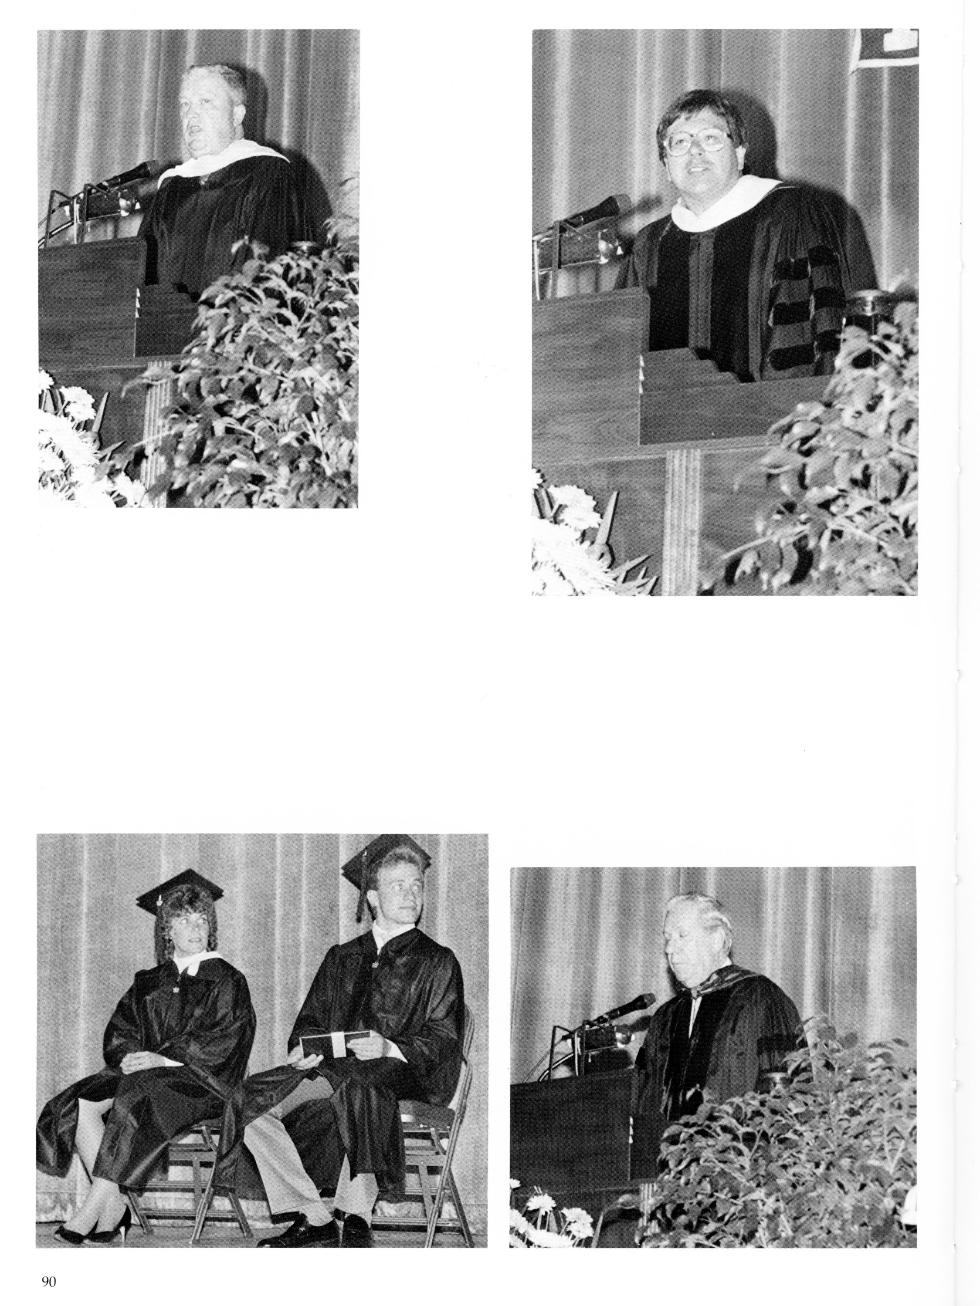 Worcester Industrial Technical Institute - Class of 1987 - Graduation